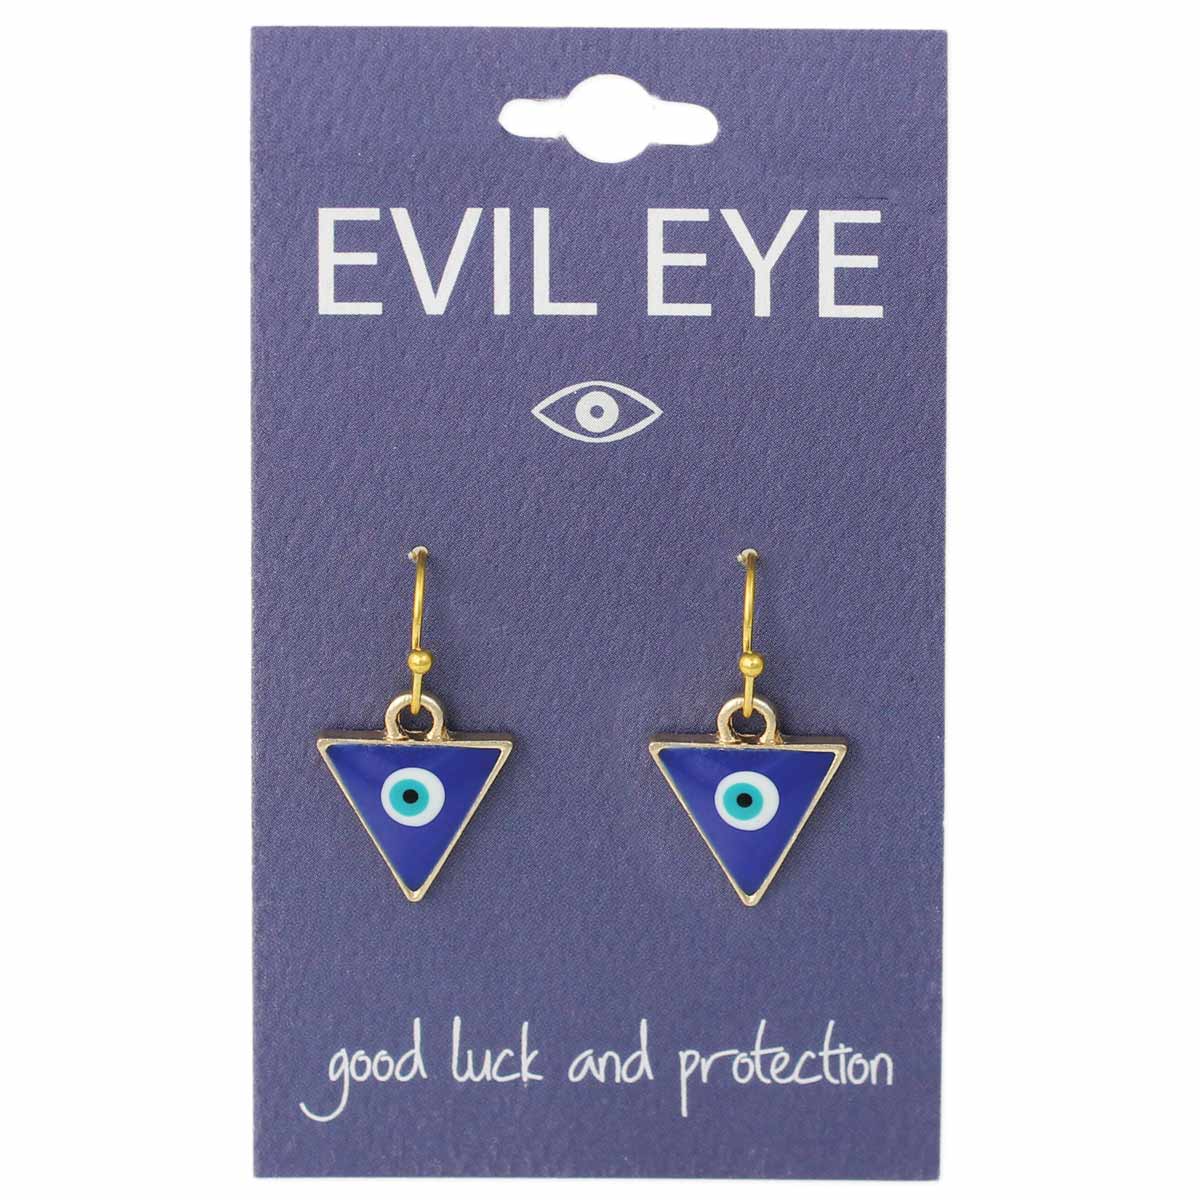 Evil Eye Gold Triangle Earrings